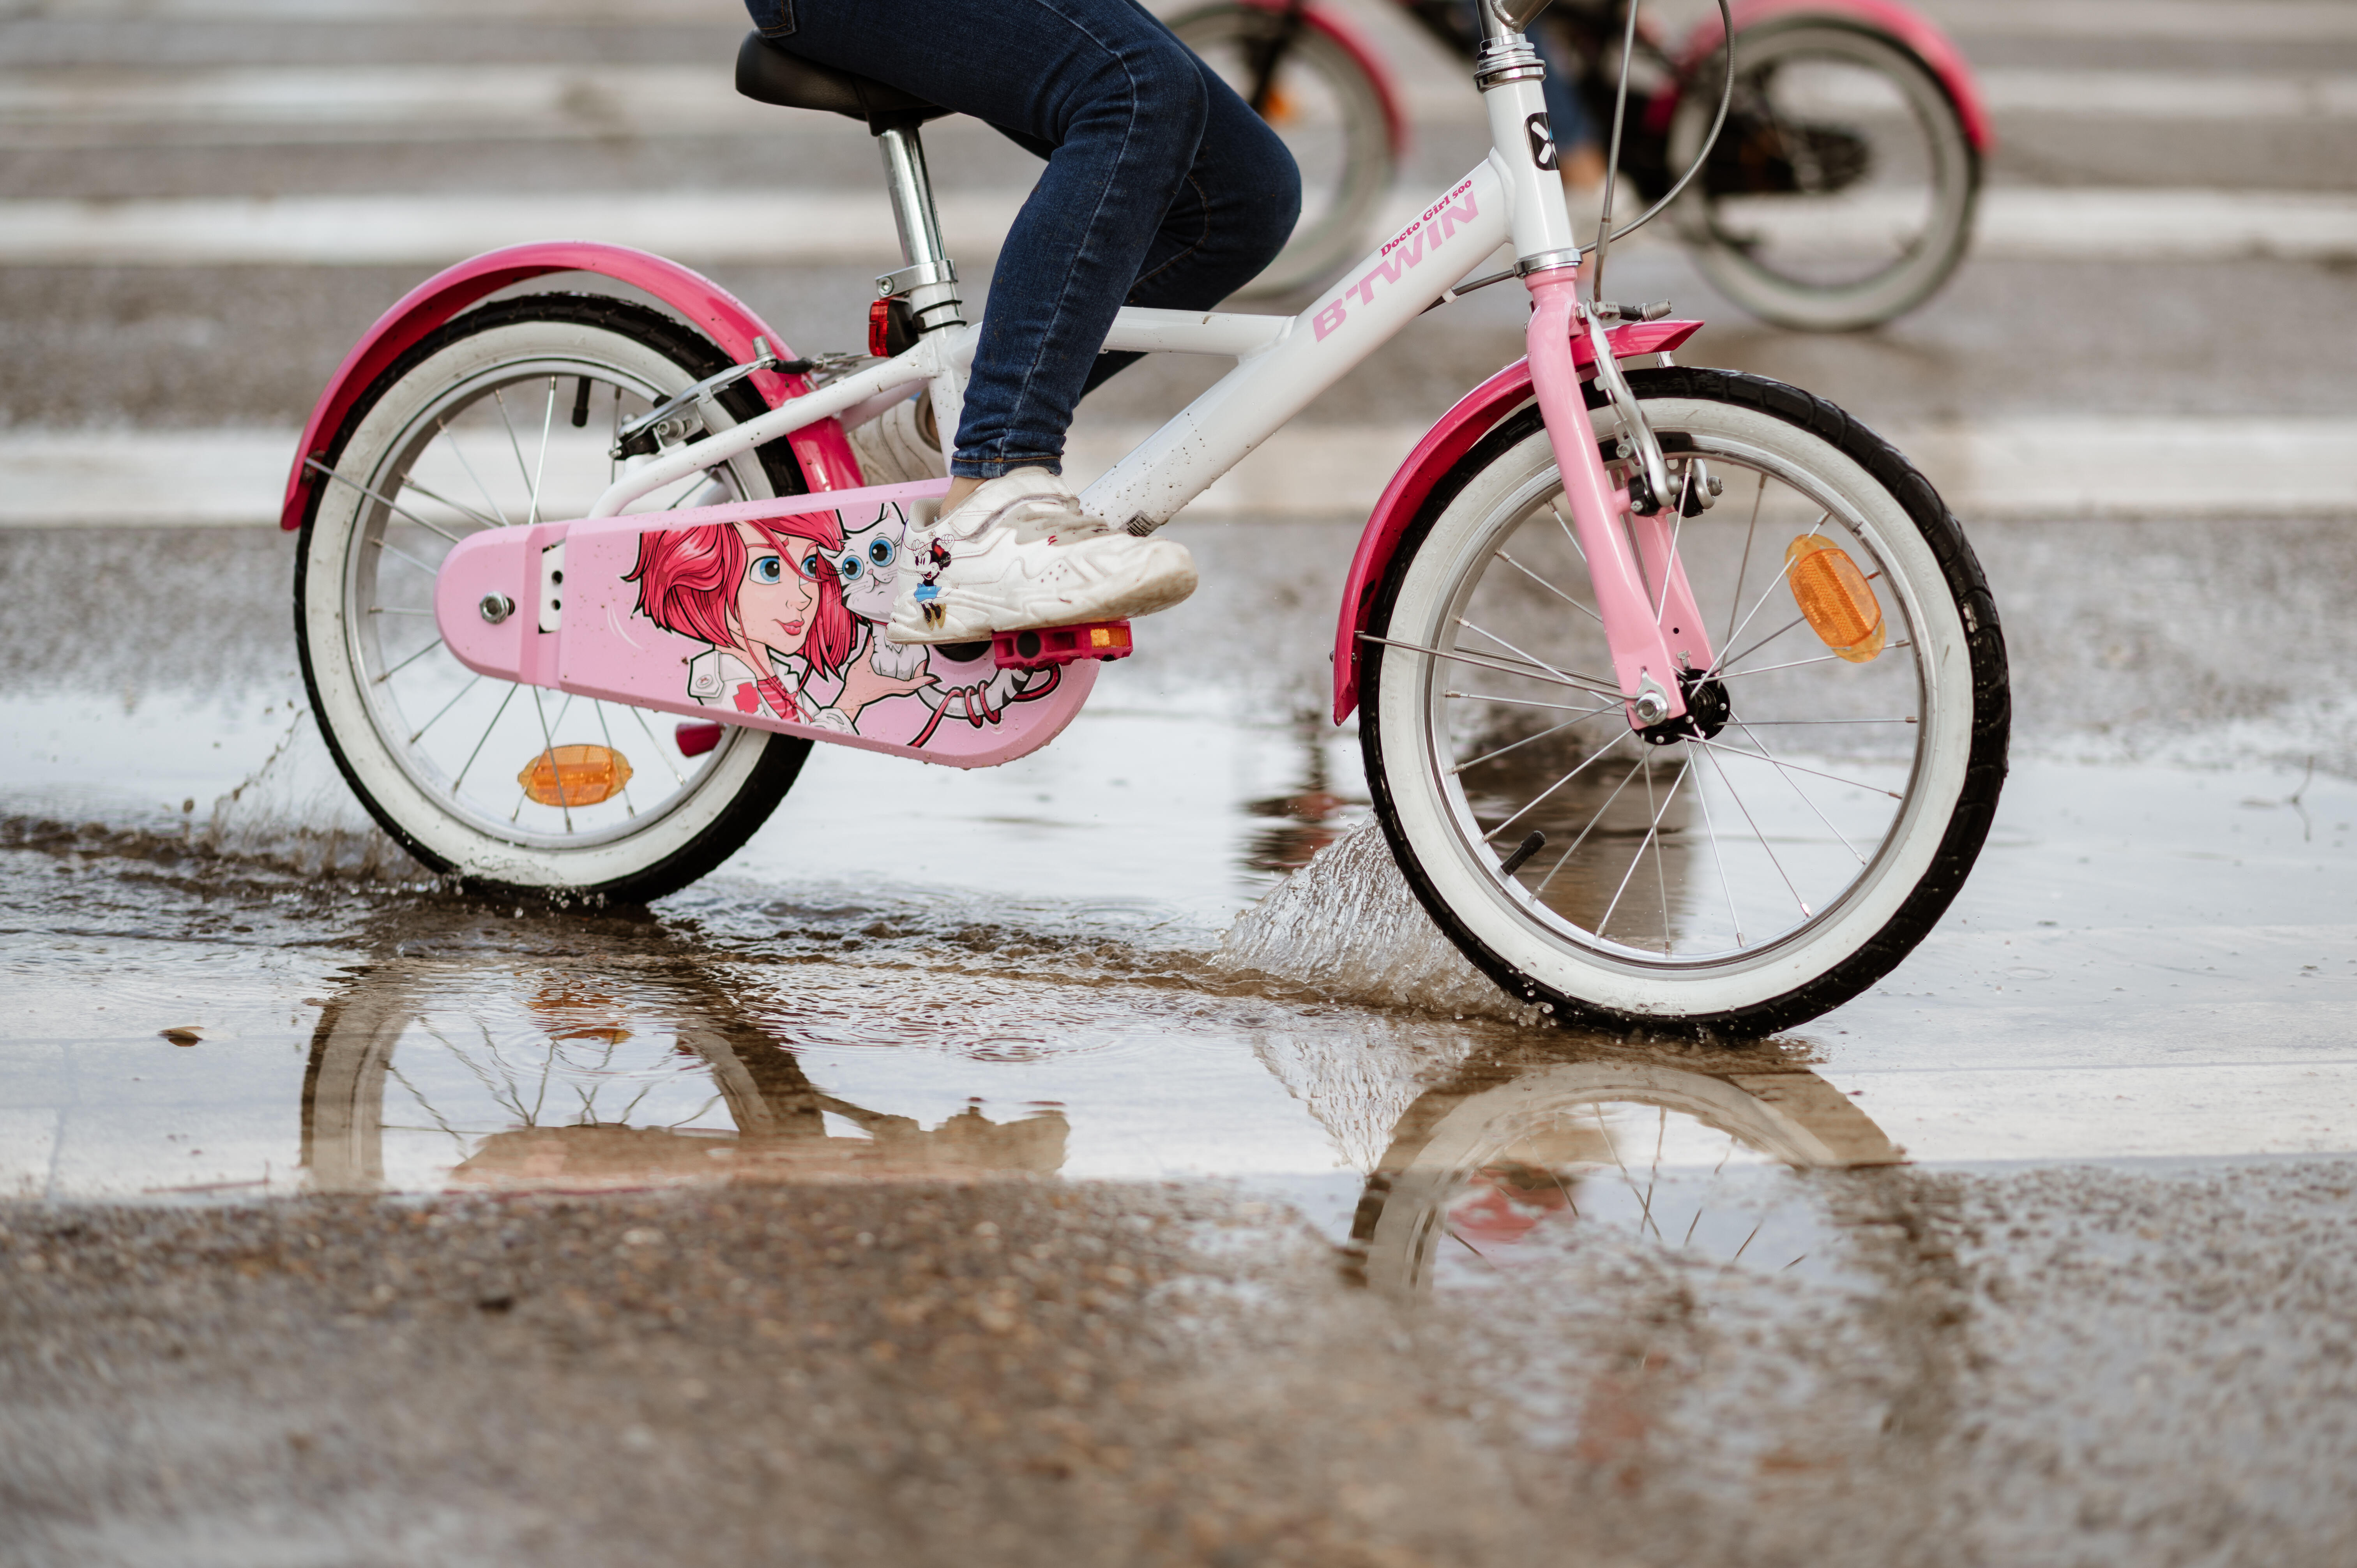 Vélo 16 po enfant (4-6 ans) - HYC 500 - BTWIN